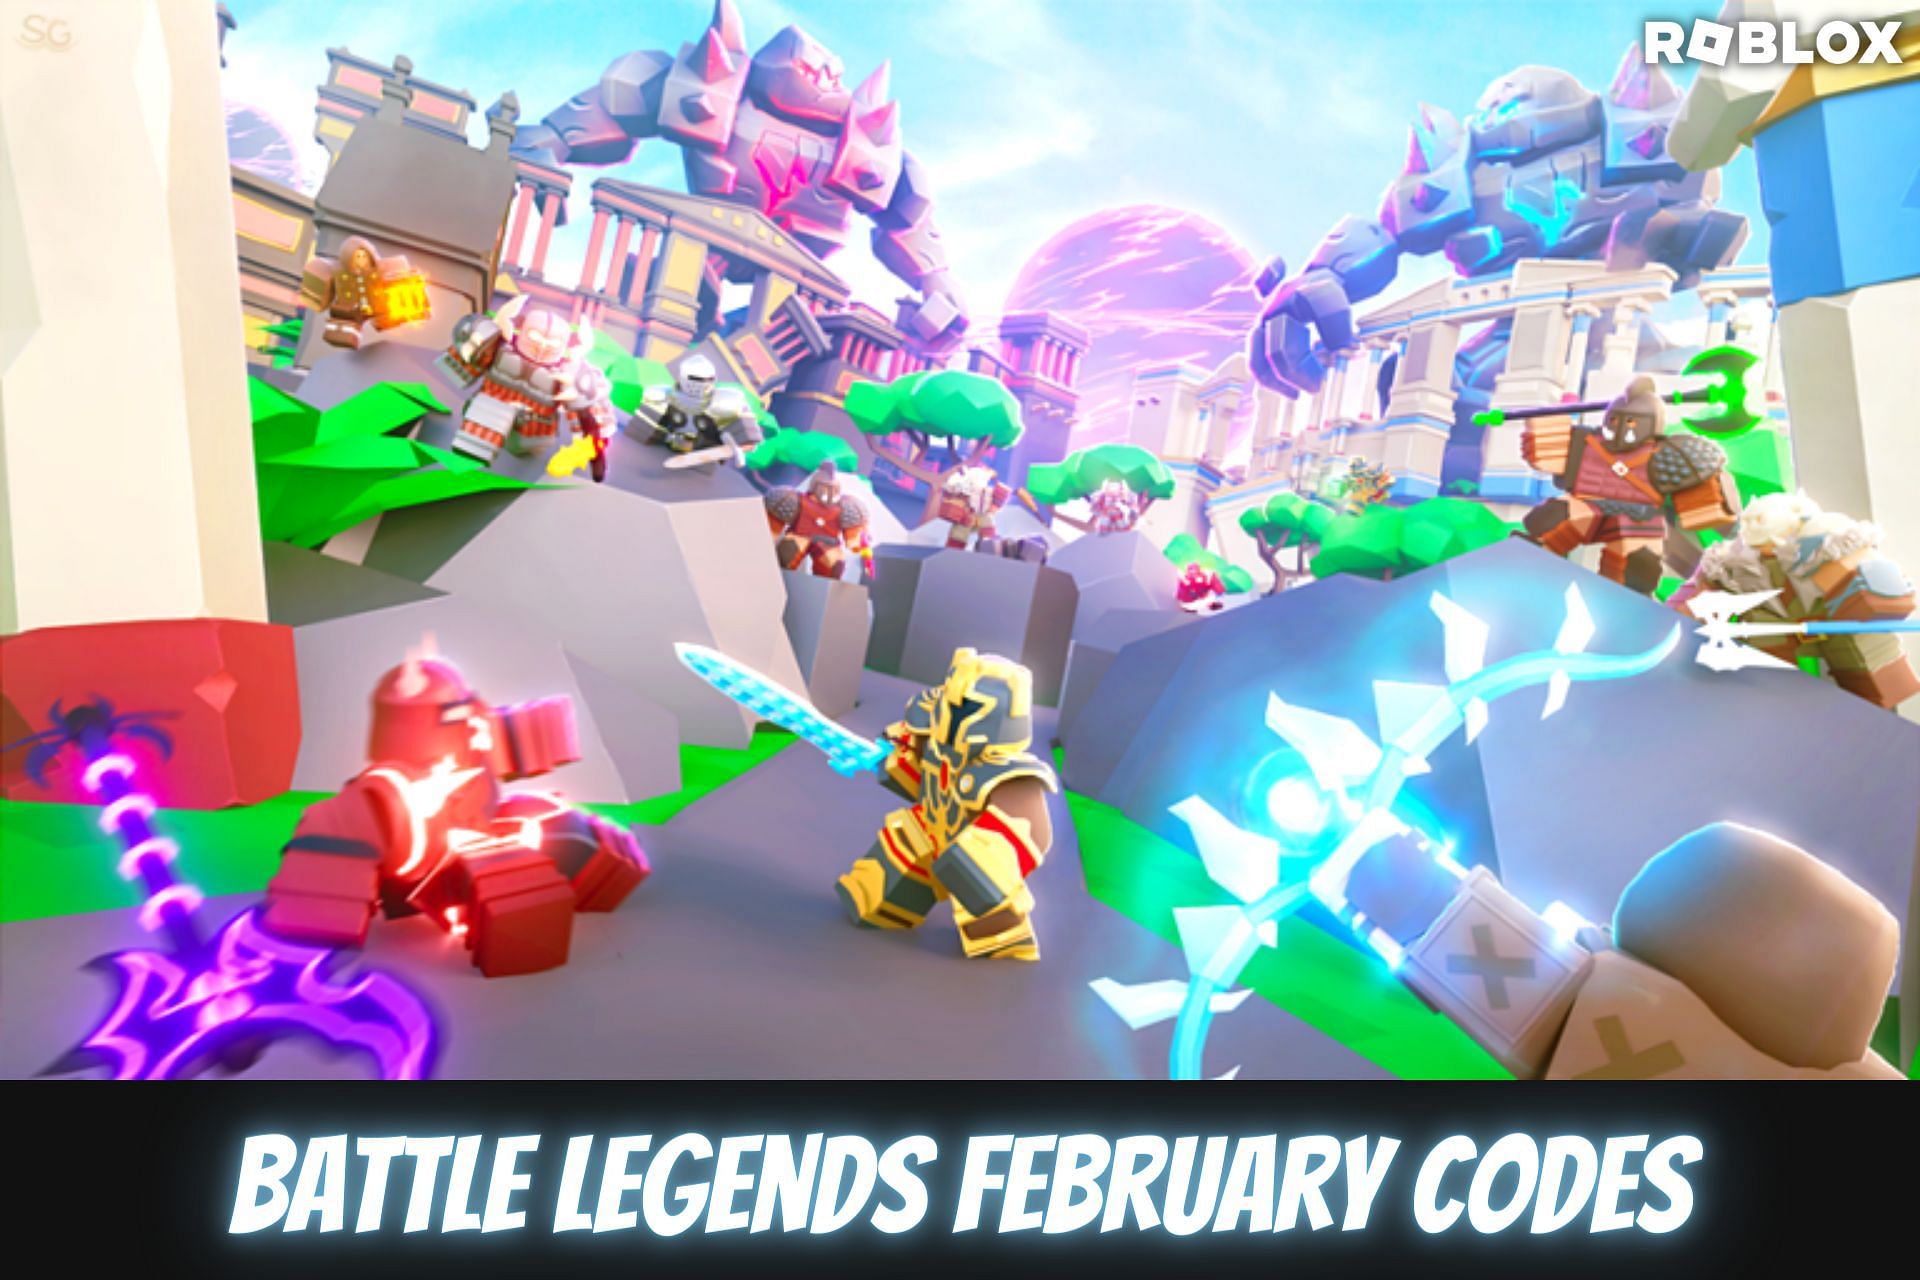 Roblox Battle Legends codes (February 2023)